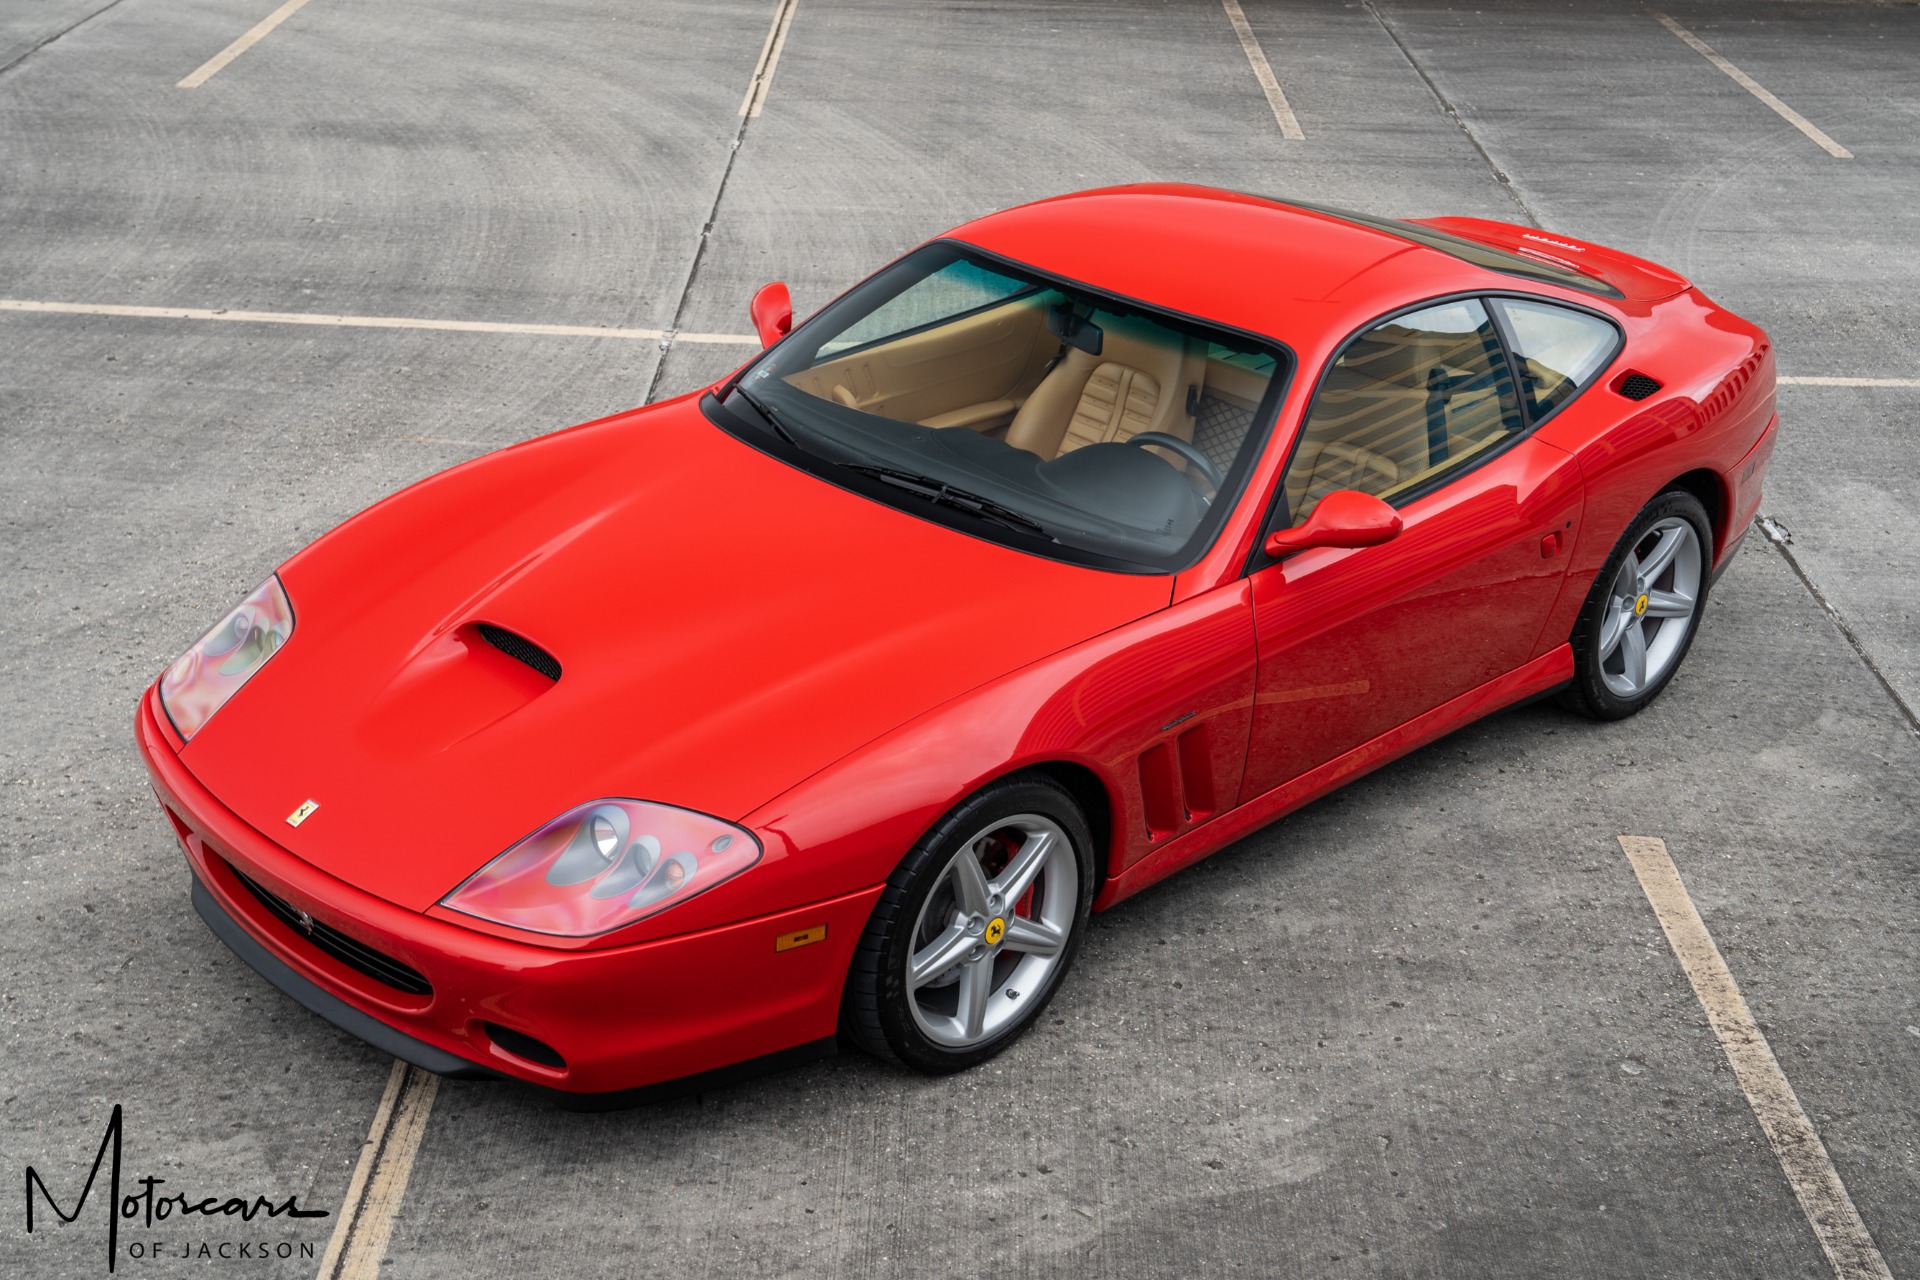 Used-2003-Ferrari-575M-Maranello-for-sale-Jackson-MS